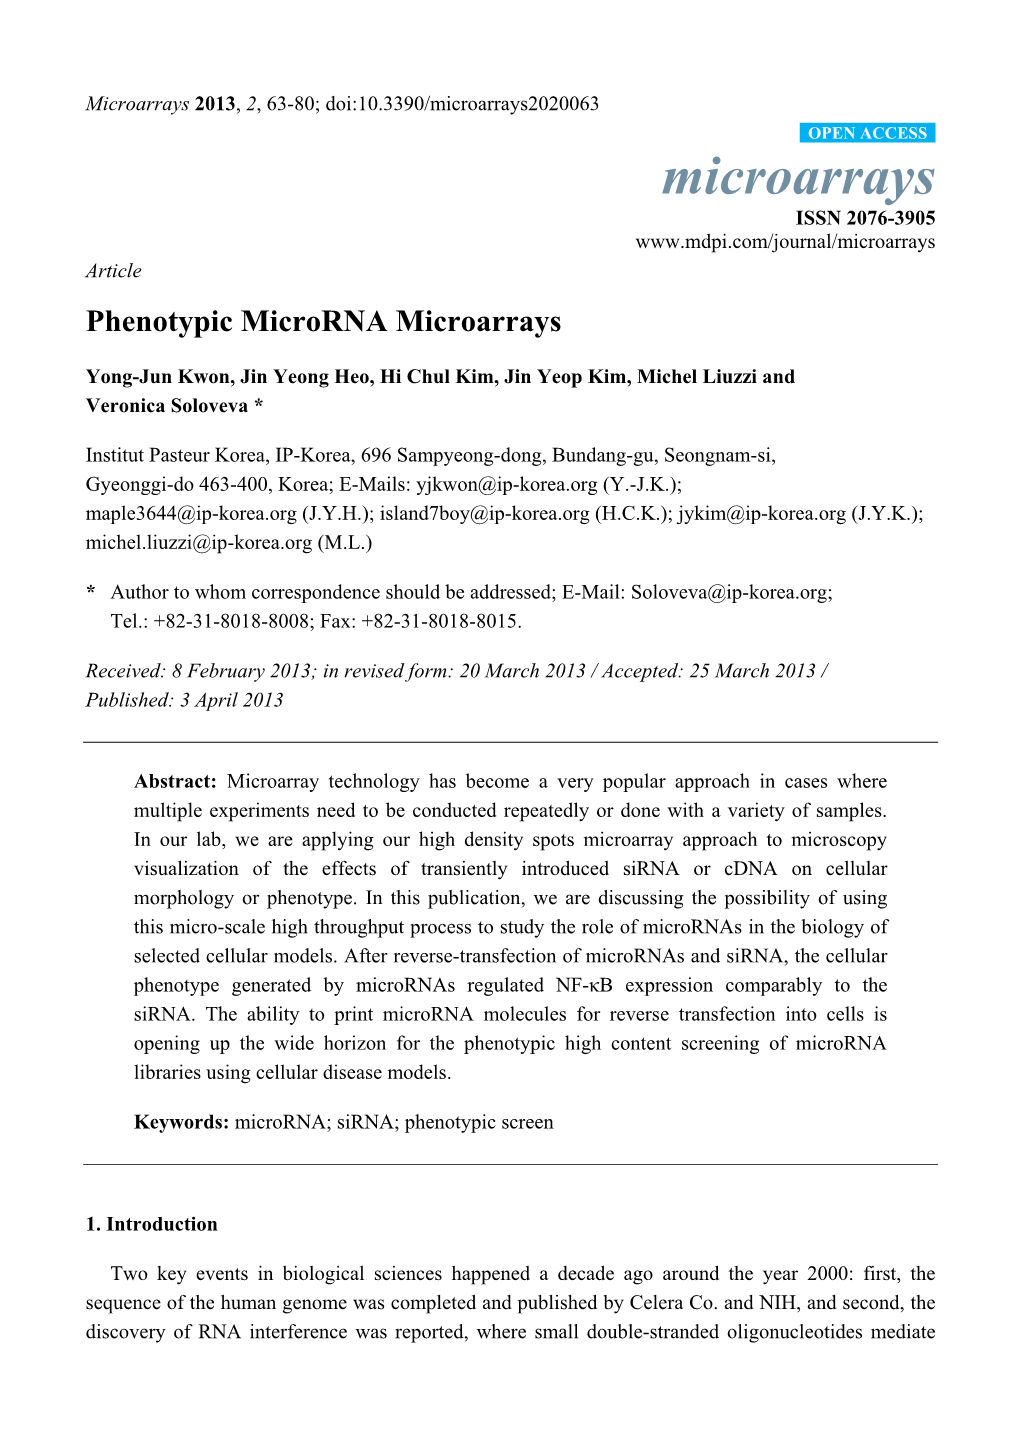 Phenotypic Microrna Microarrays